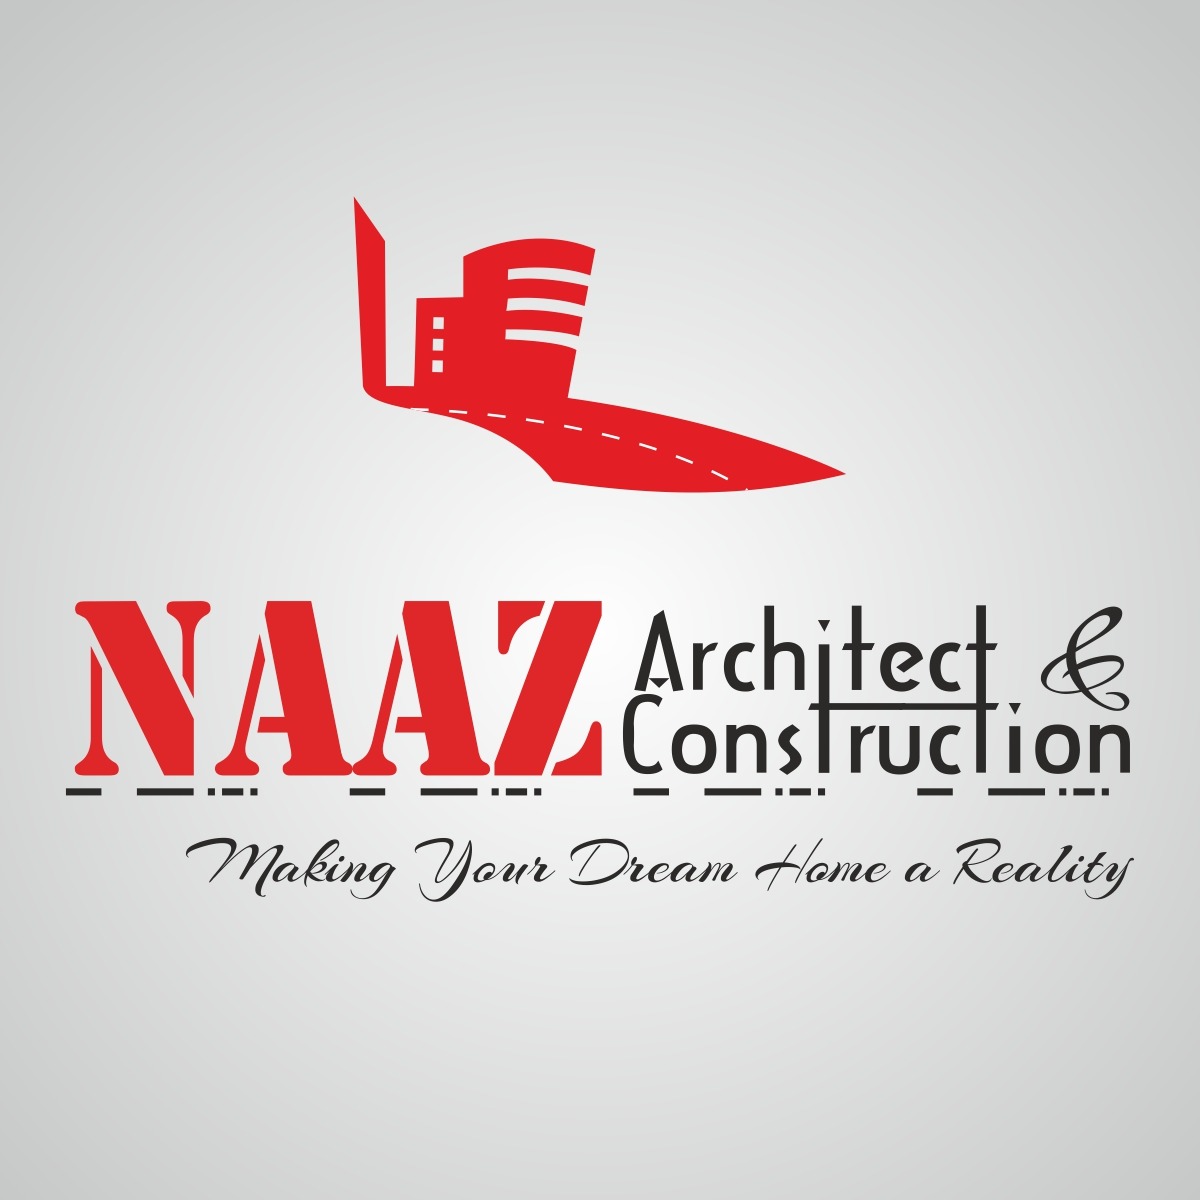 NAAZ Architect & Construction Logo